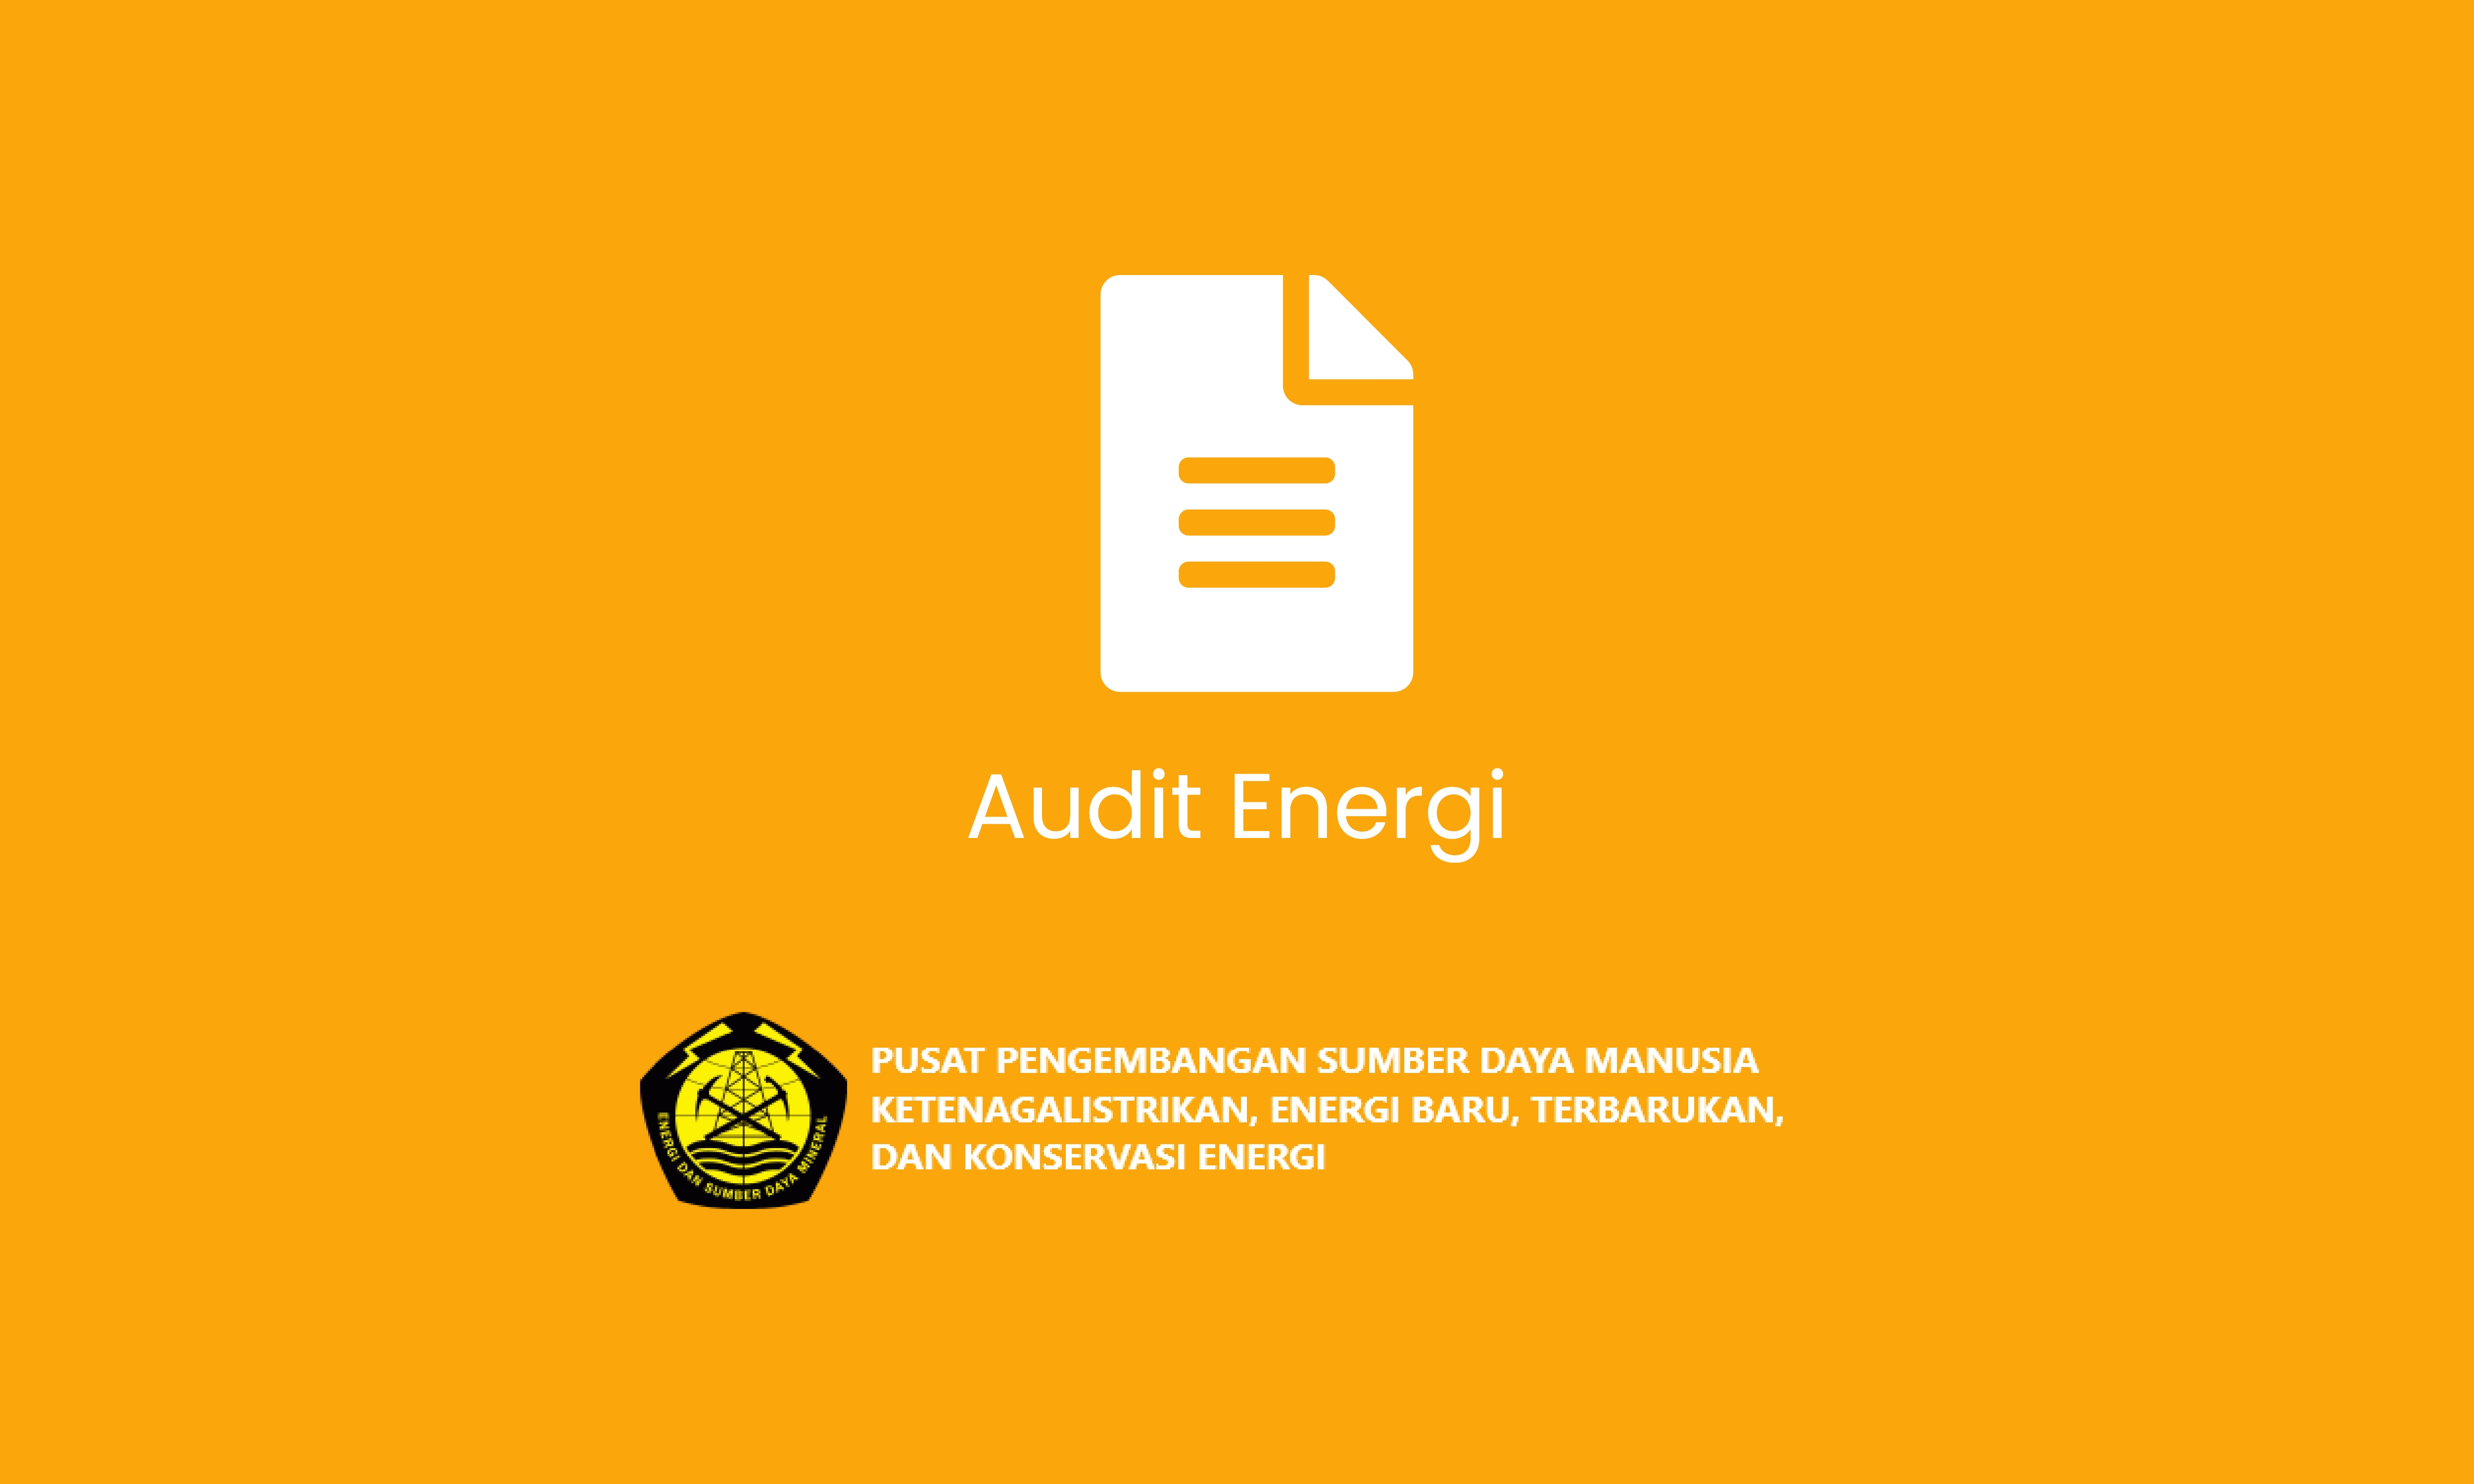 Image Audit Energi